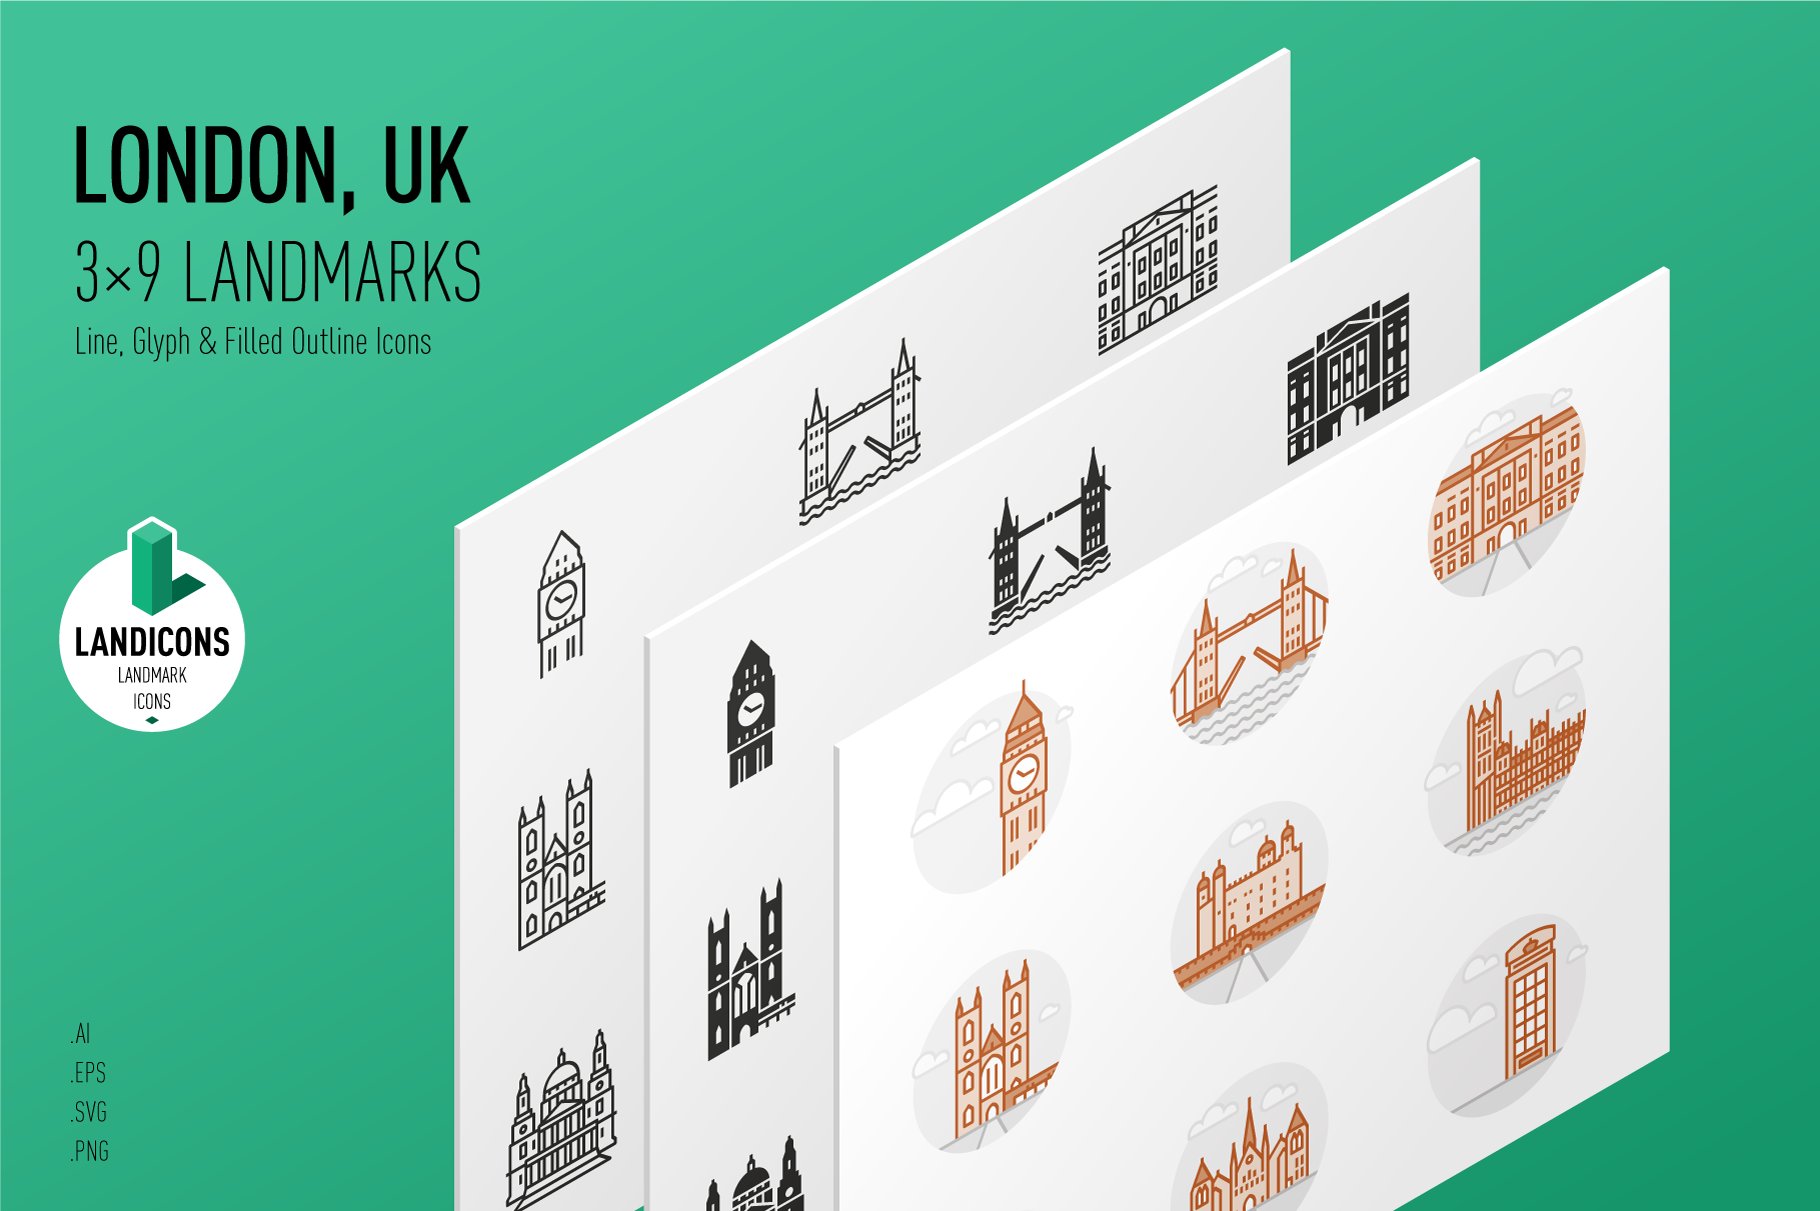 Landmarks of the UK - London cover image.